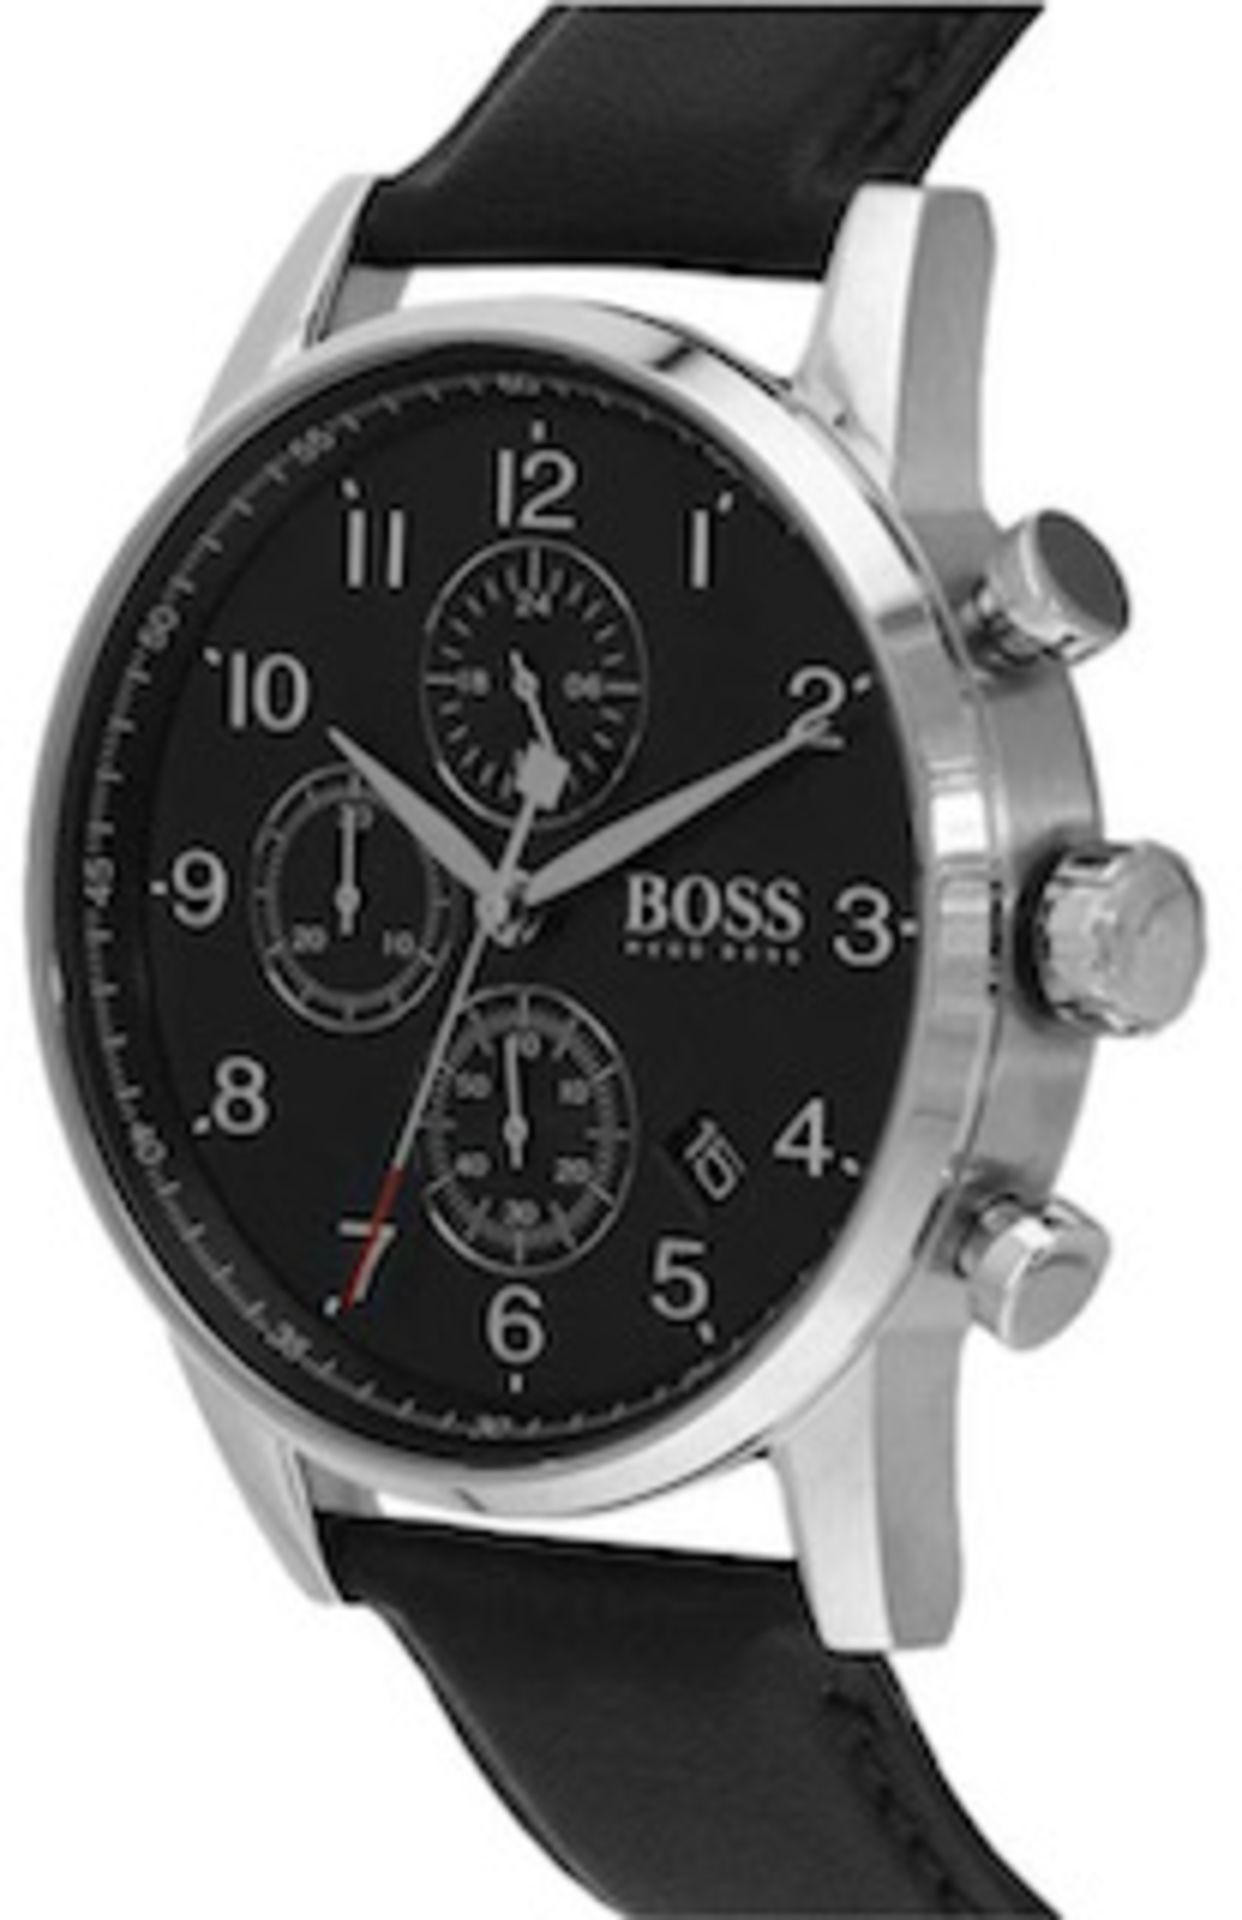 Hugo Boss 1513678 Men's Navigator Black Leather Strap Chronograph Watch - Image 4 of 6